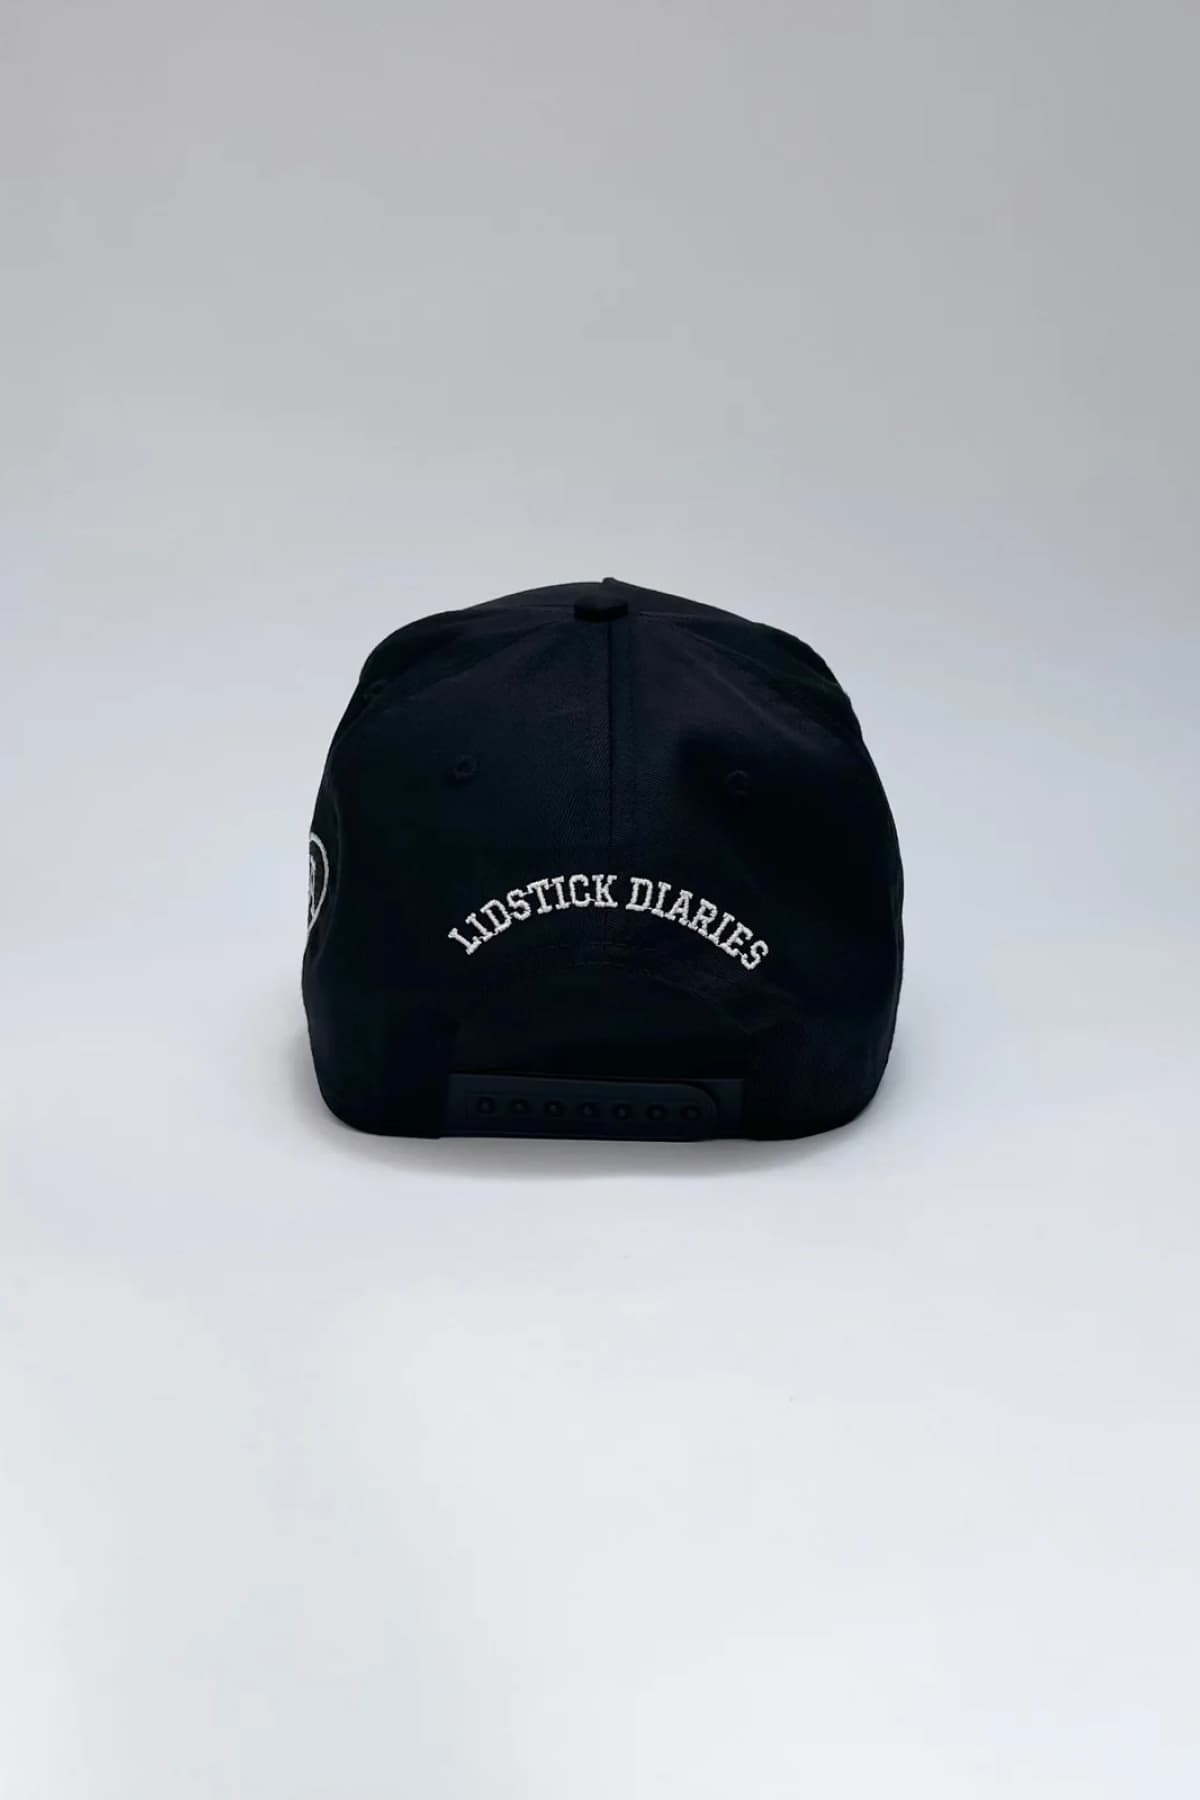 Los Angeles Rebel Baseball Cap (Black) - Hat